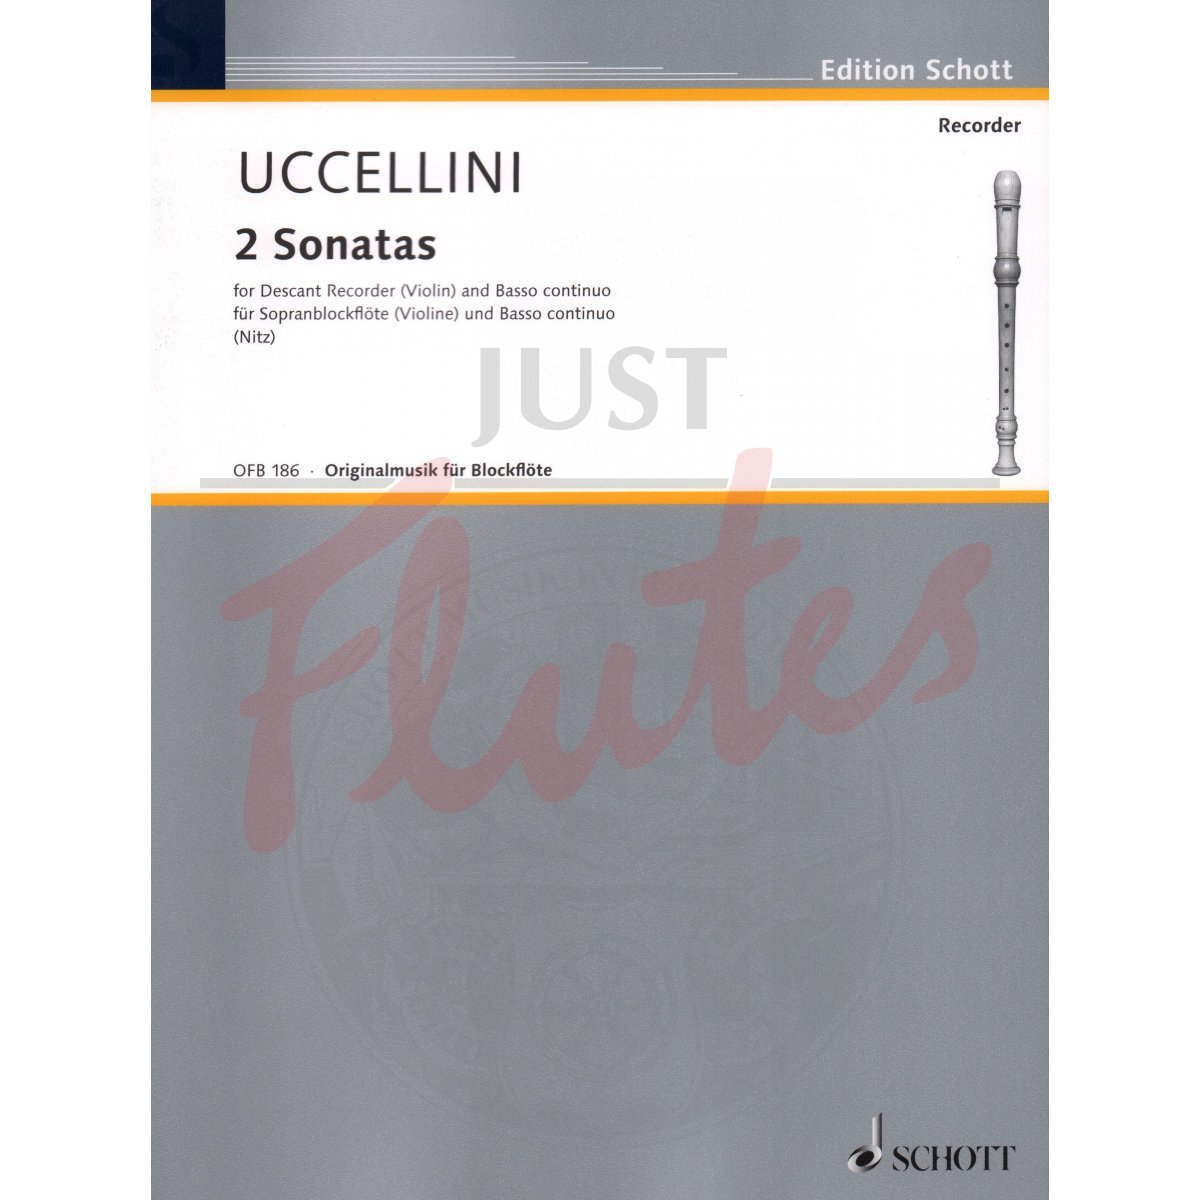 2 Sonatas for Descant Recorder/Violin and Basso Continuo